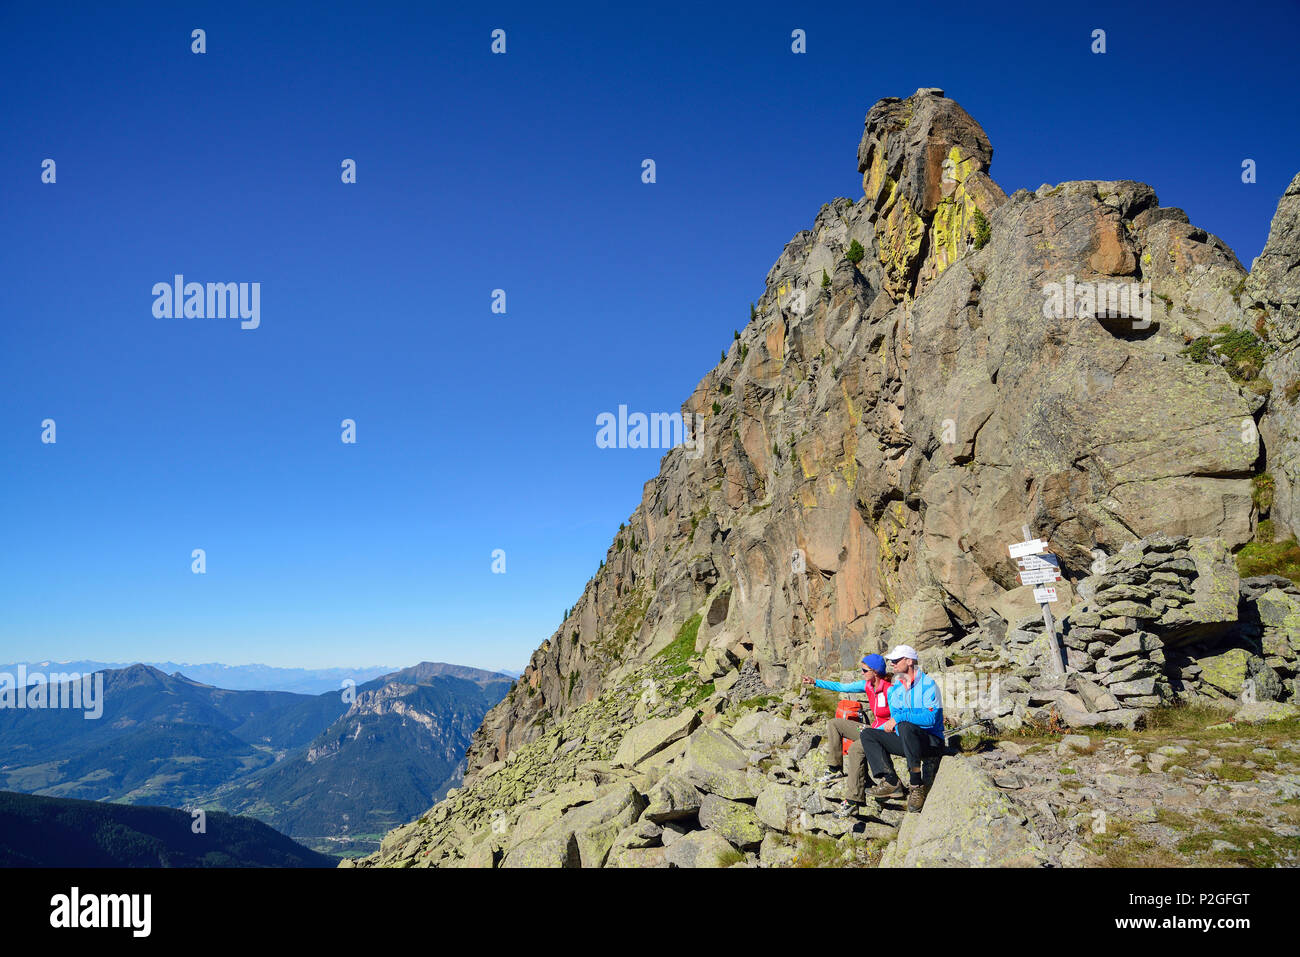 Two hikers sitting beneath a rock spire and looking at the mountains, Trans-Lagorai, Lagorai range, Dolomites, UNESCO World Heri Stock Photo